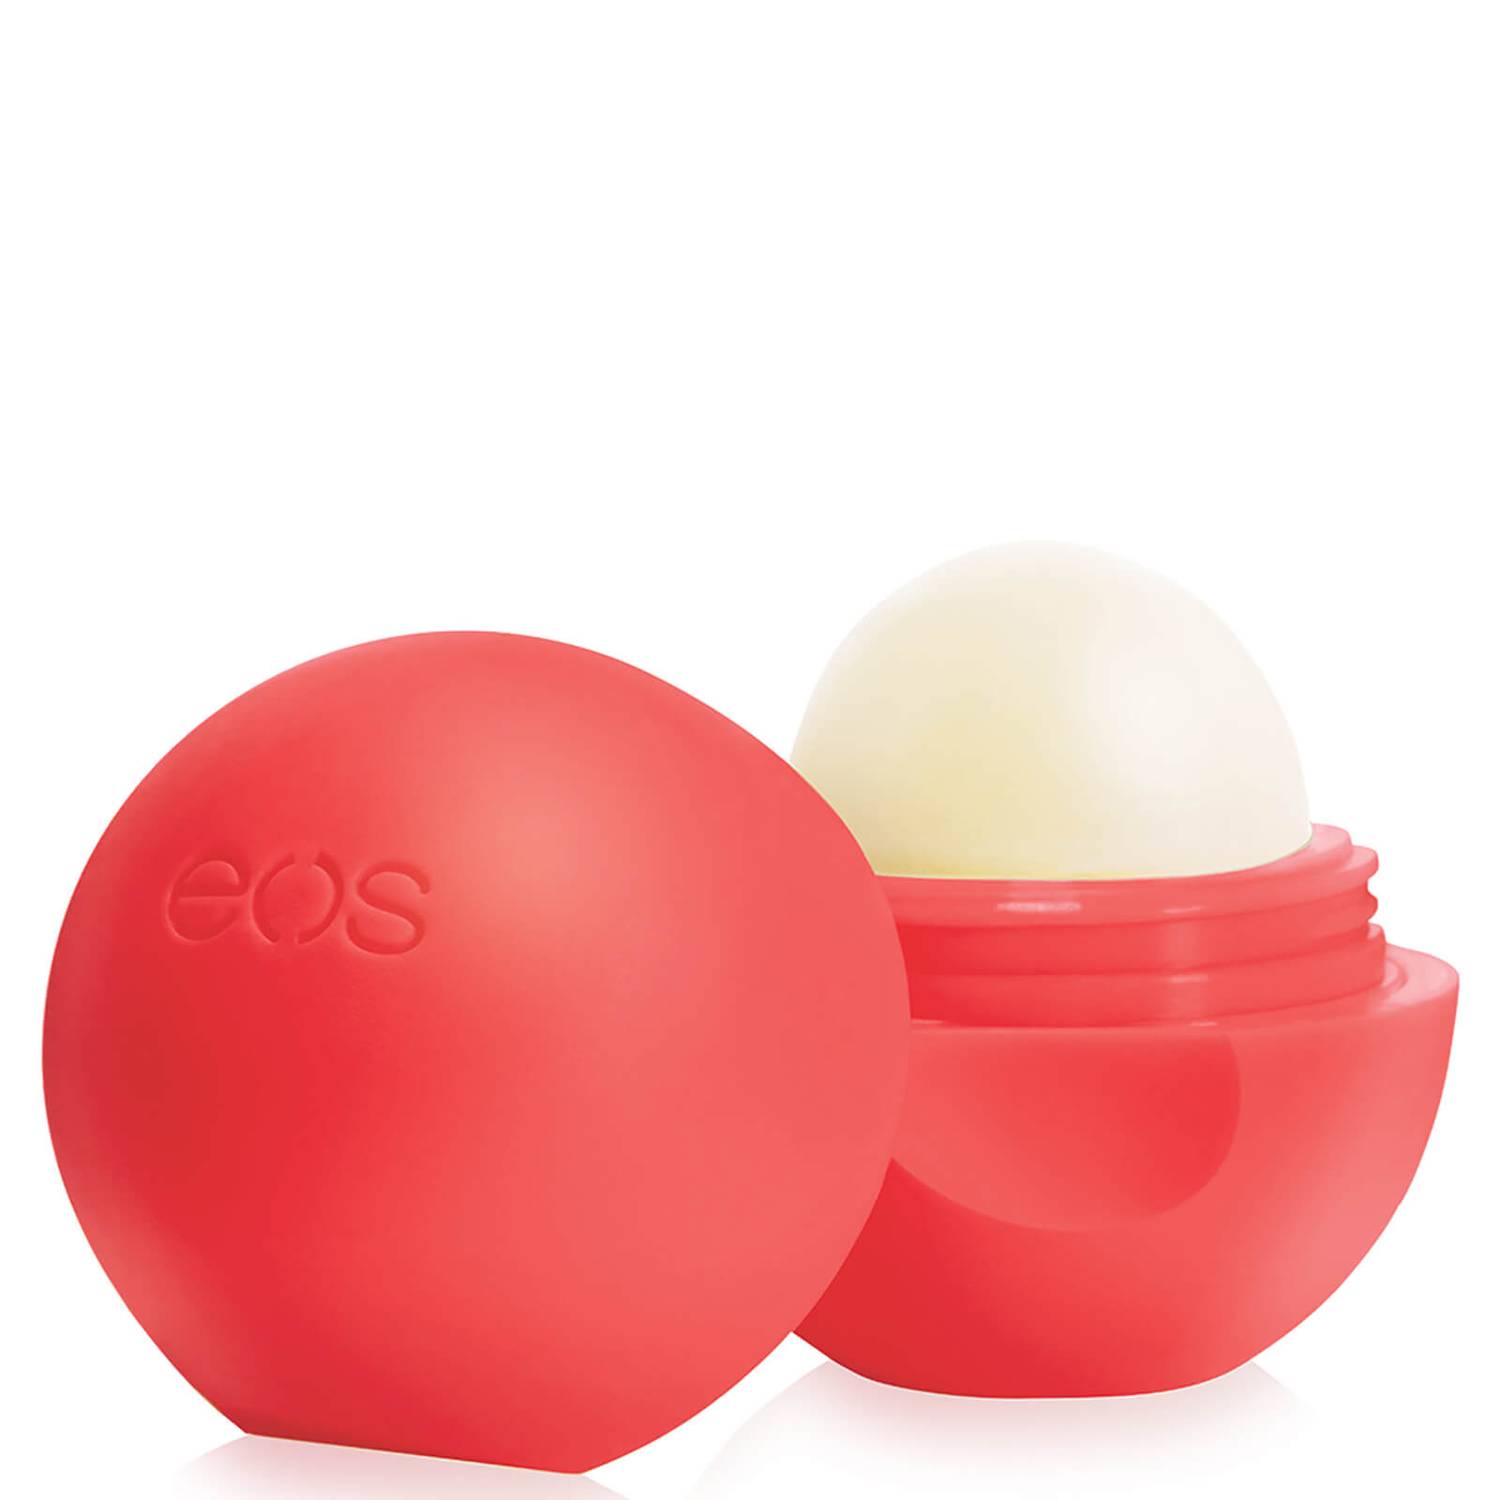 EOS Organic Lip Balm Sphere in Summer Fruit